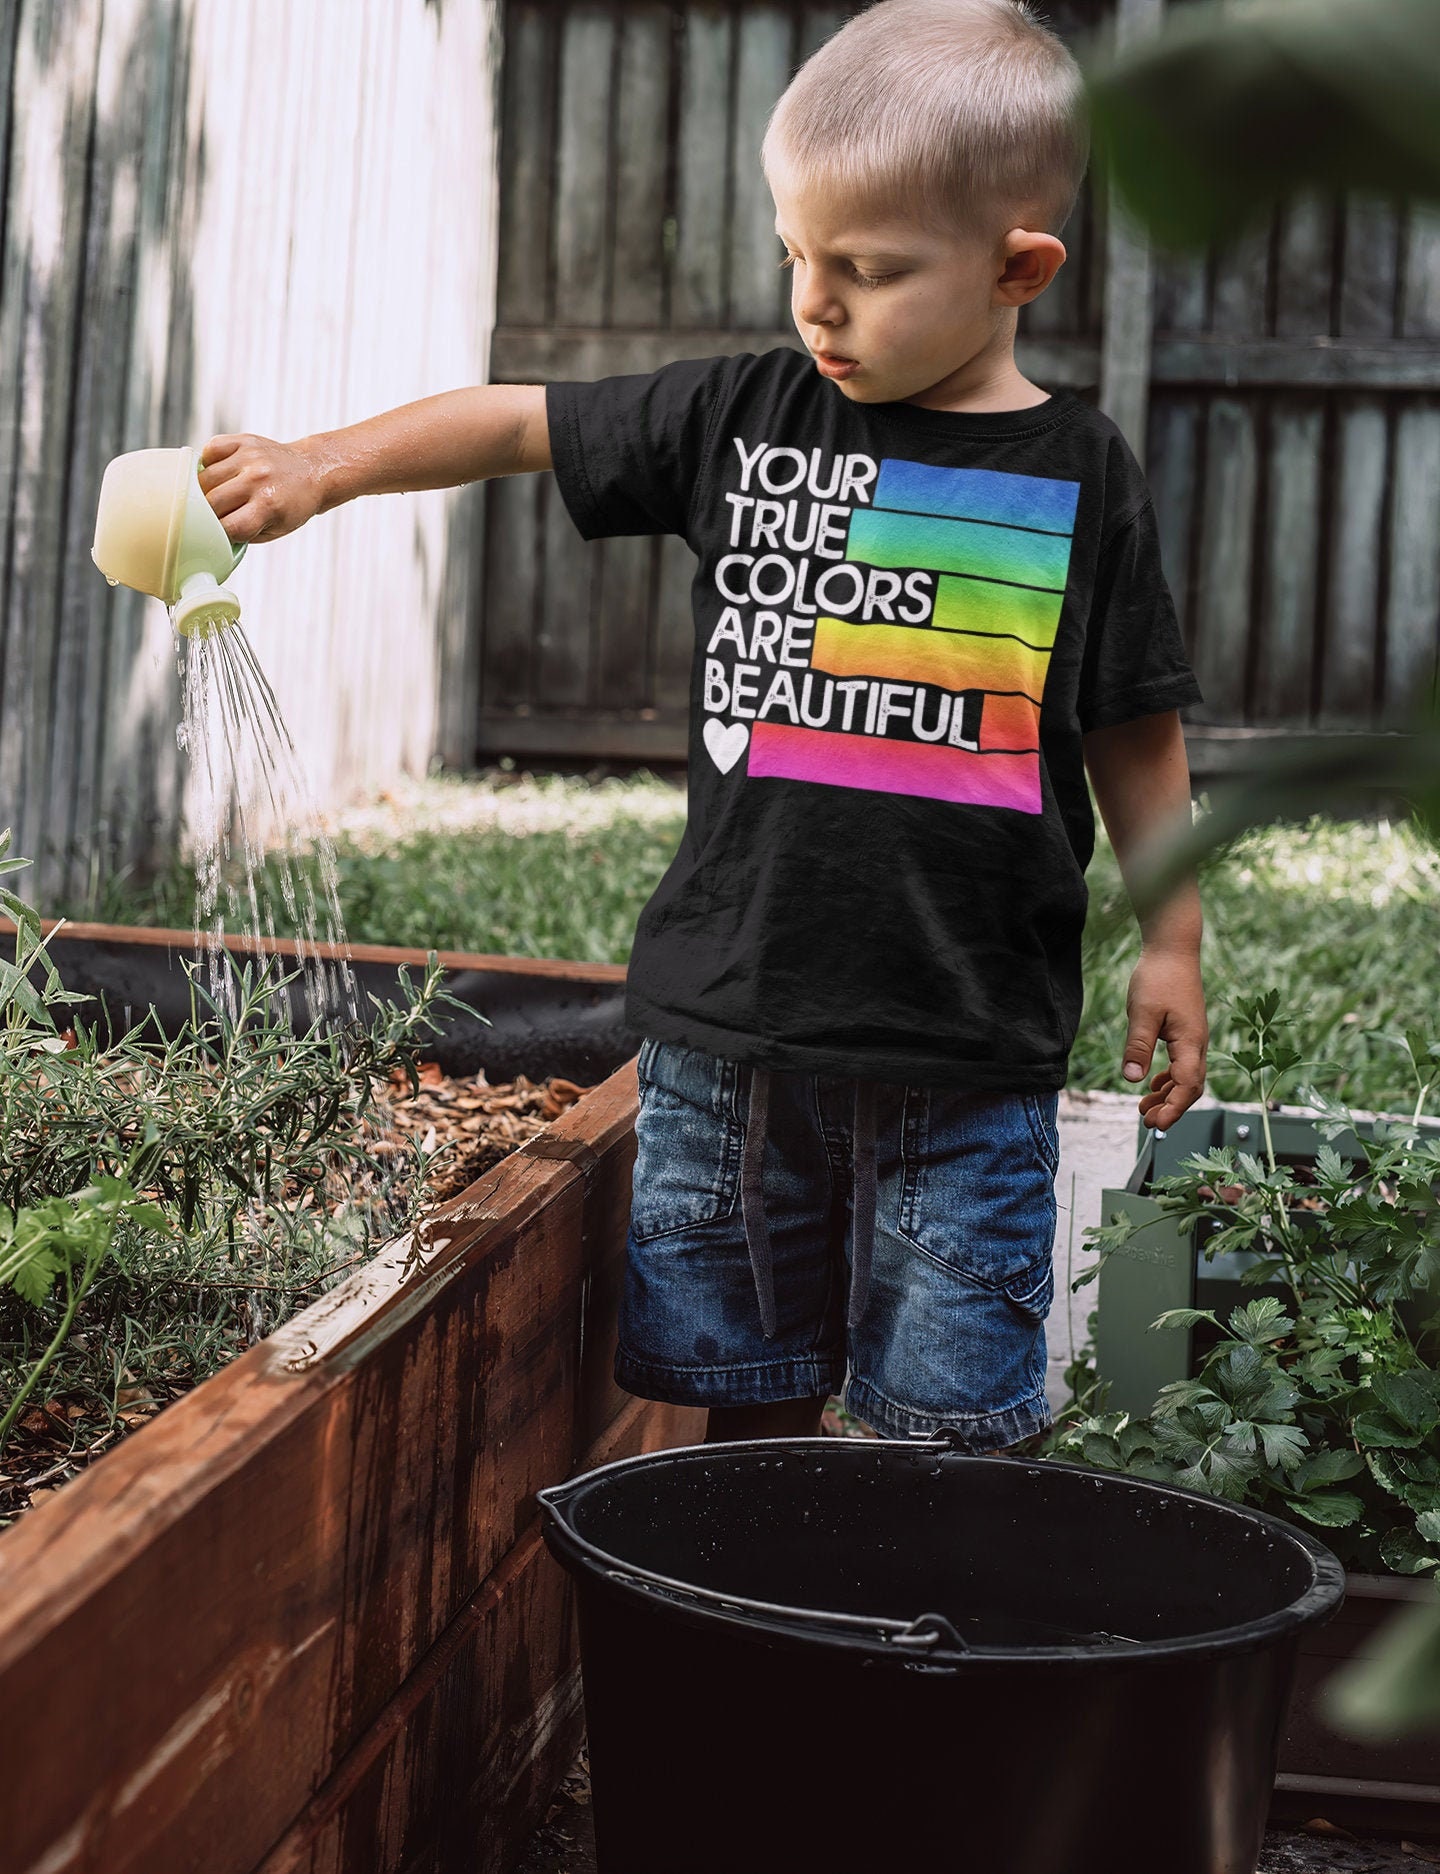 Show Your True Colors LGBT T-Shirt